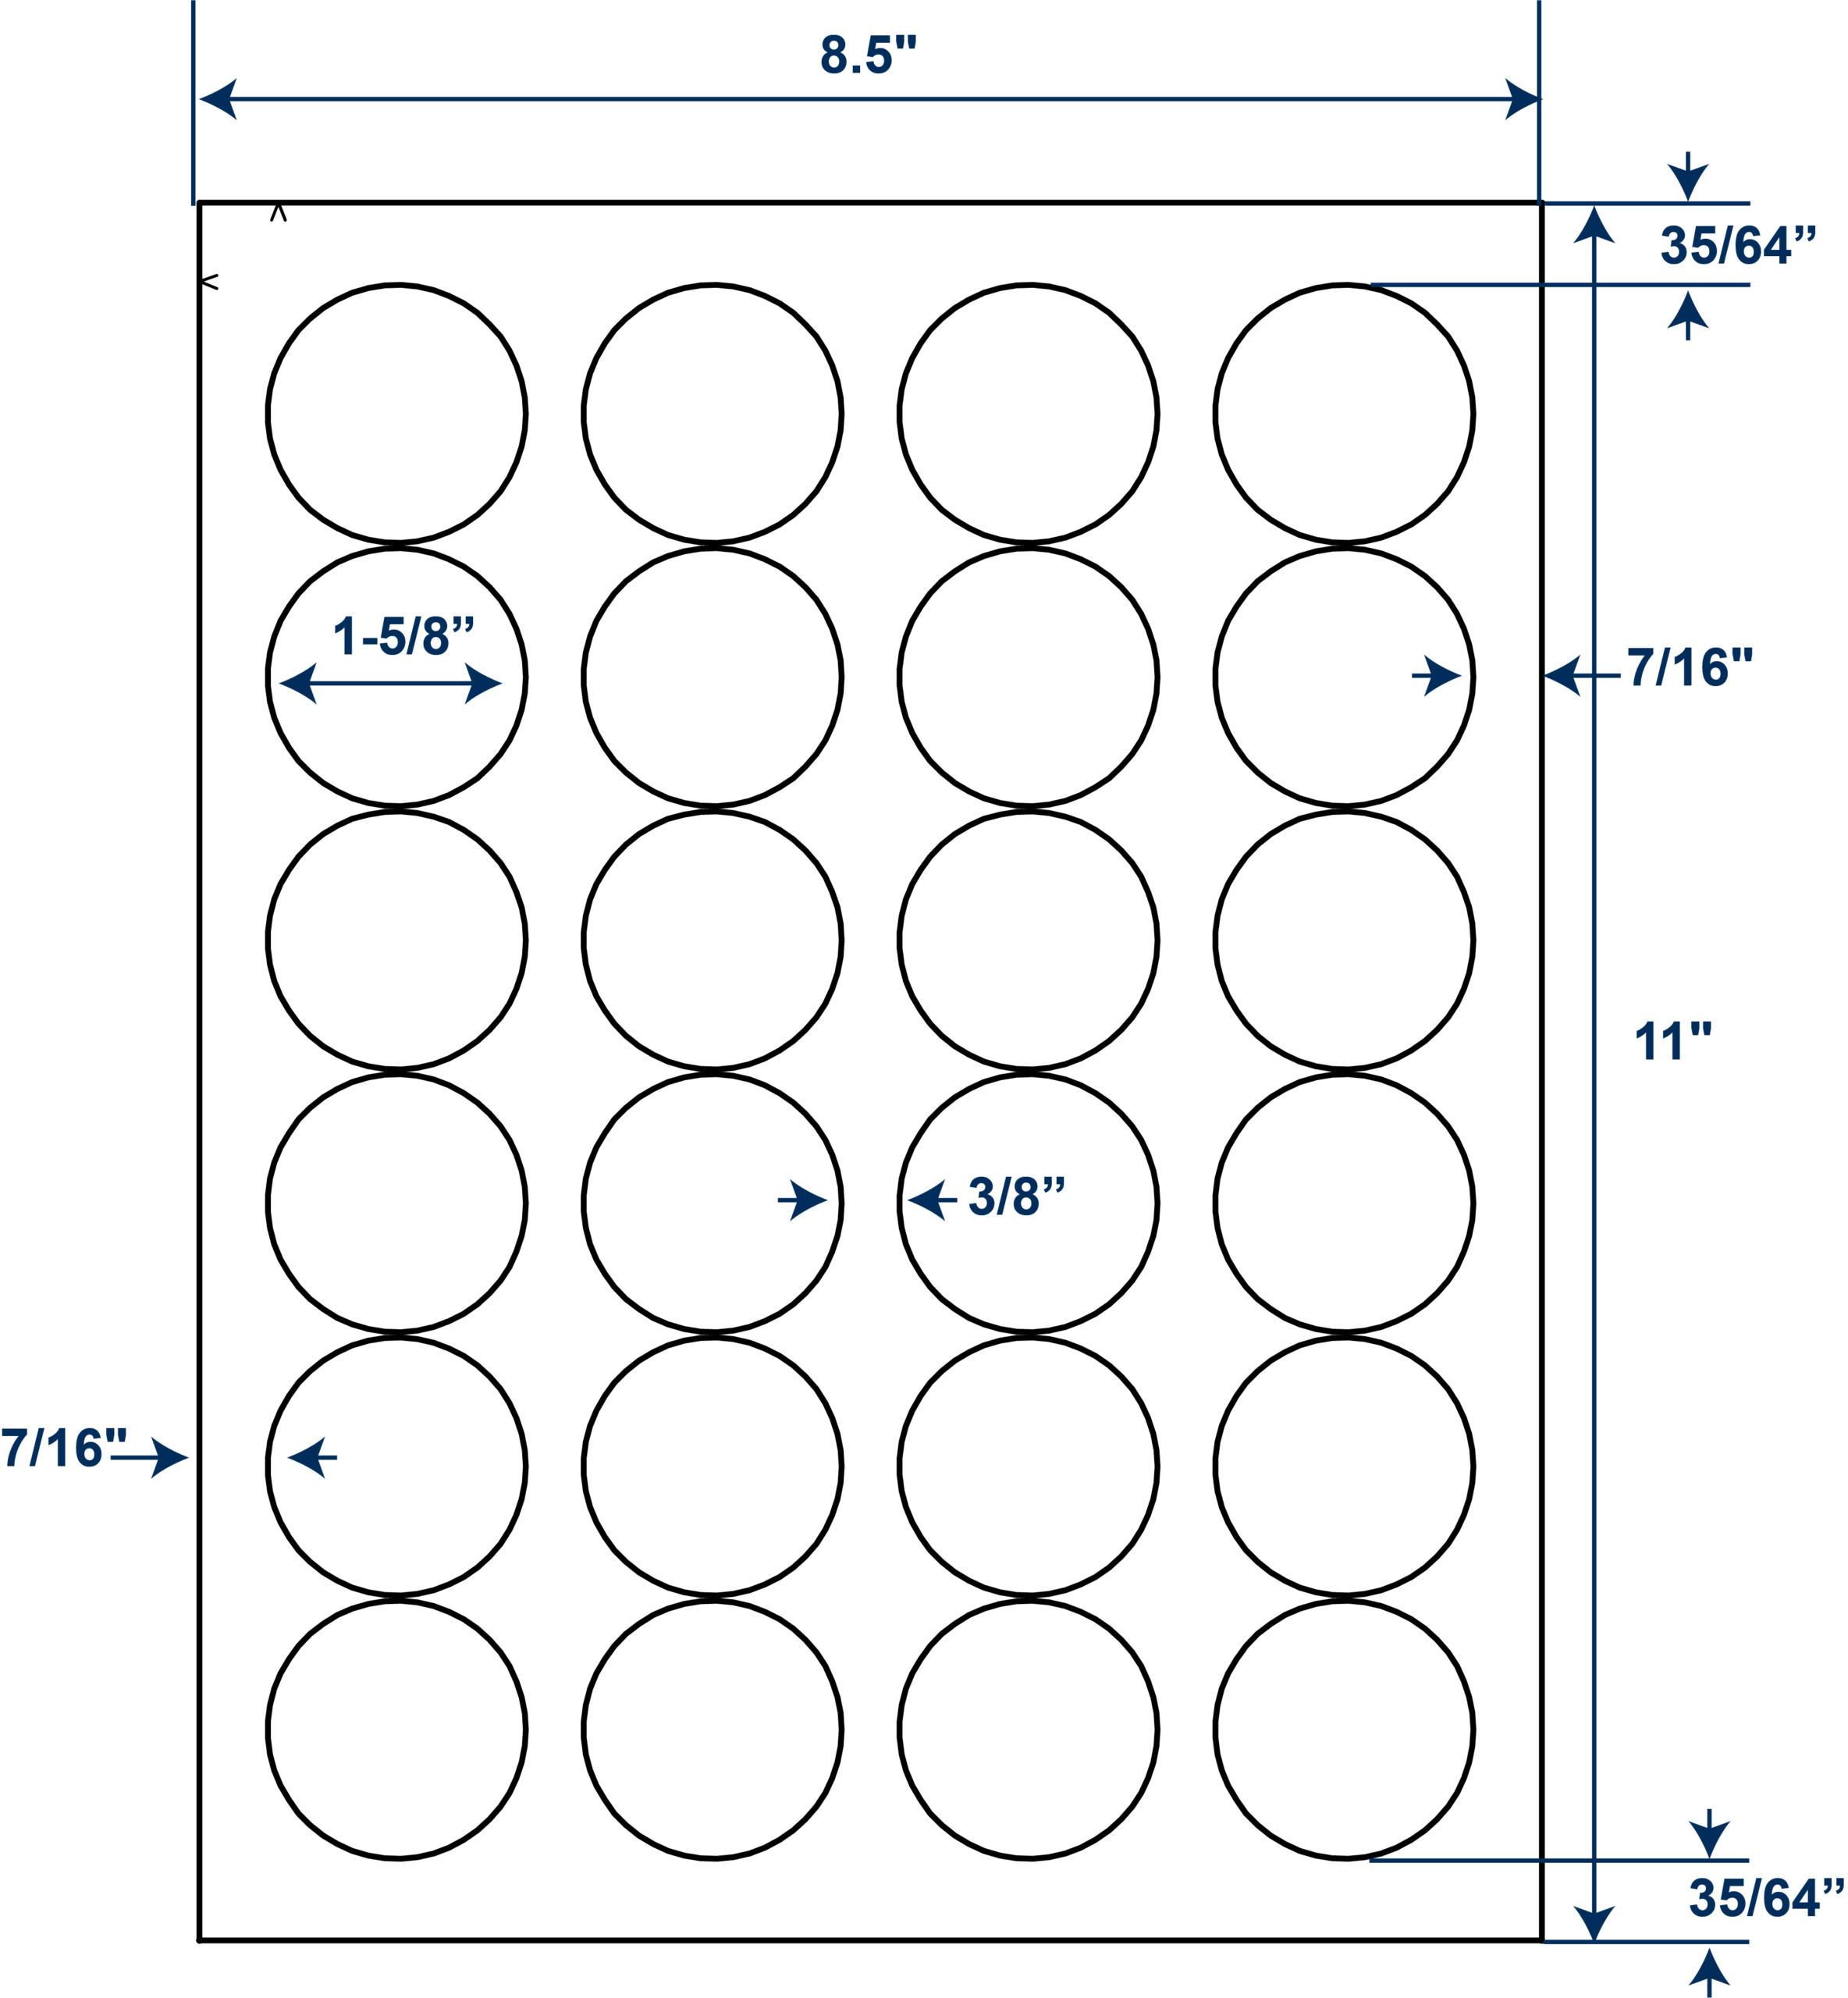 1-5/8" Diameter Circle Sheeted Labels (250 Sheets)